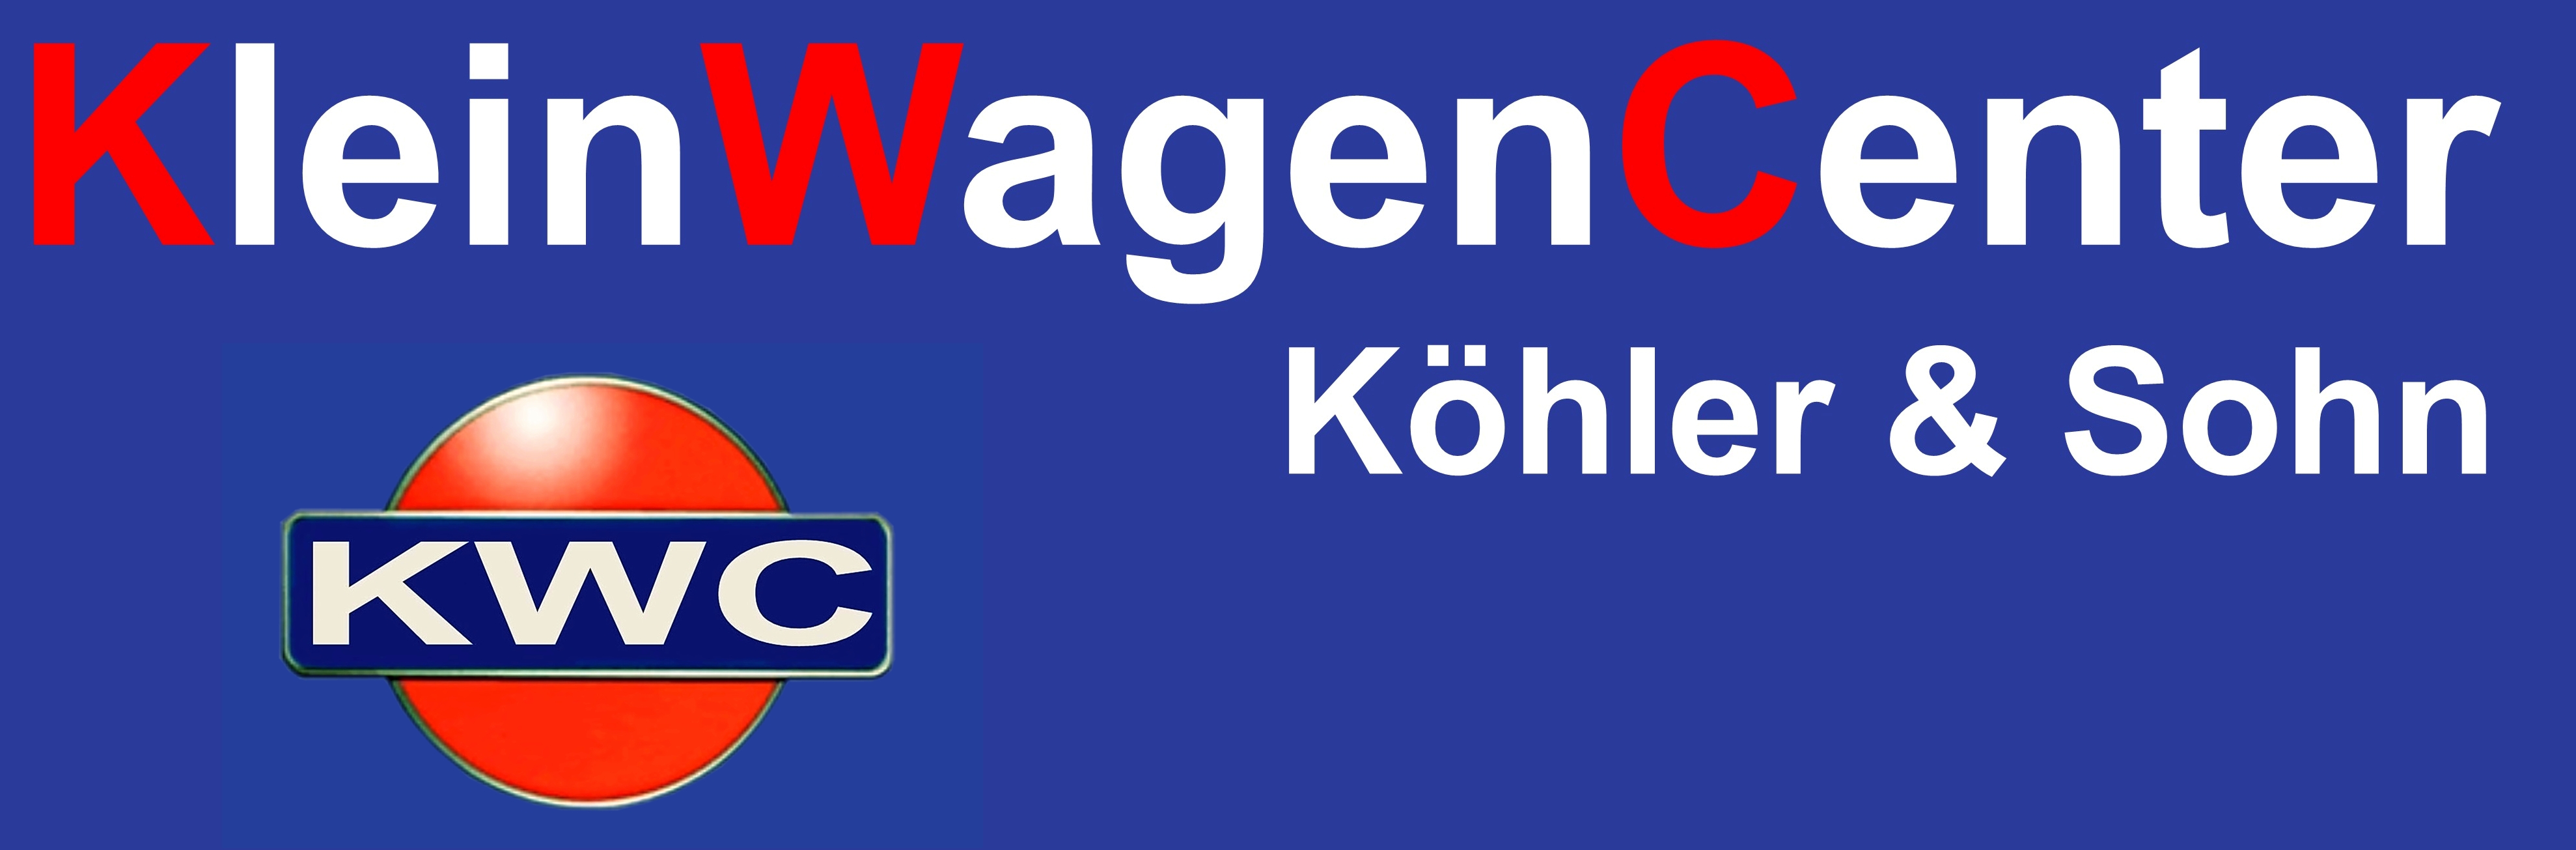 KleinWagenCenter Köhler & Sohn logo